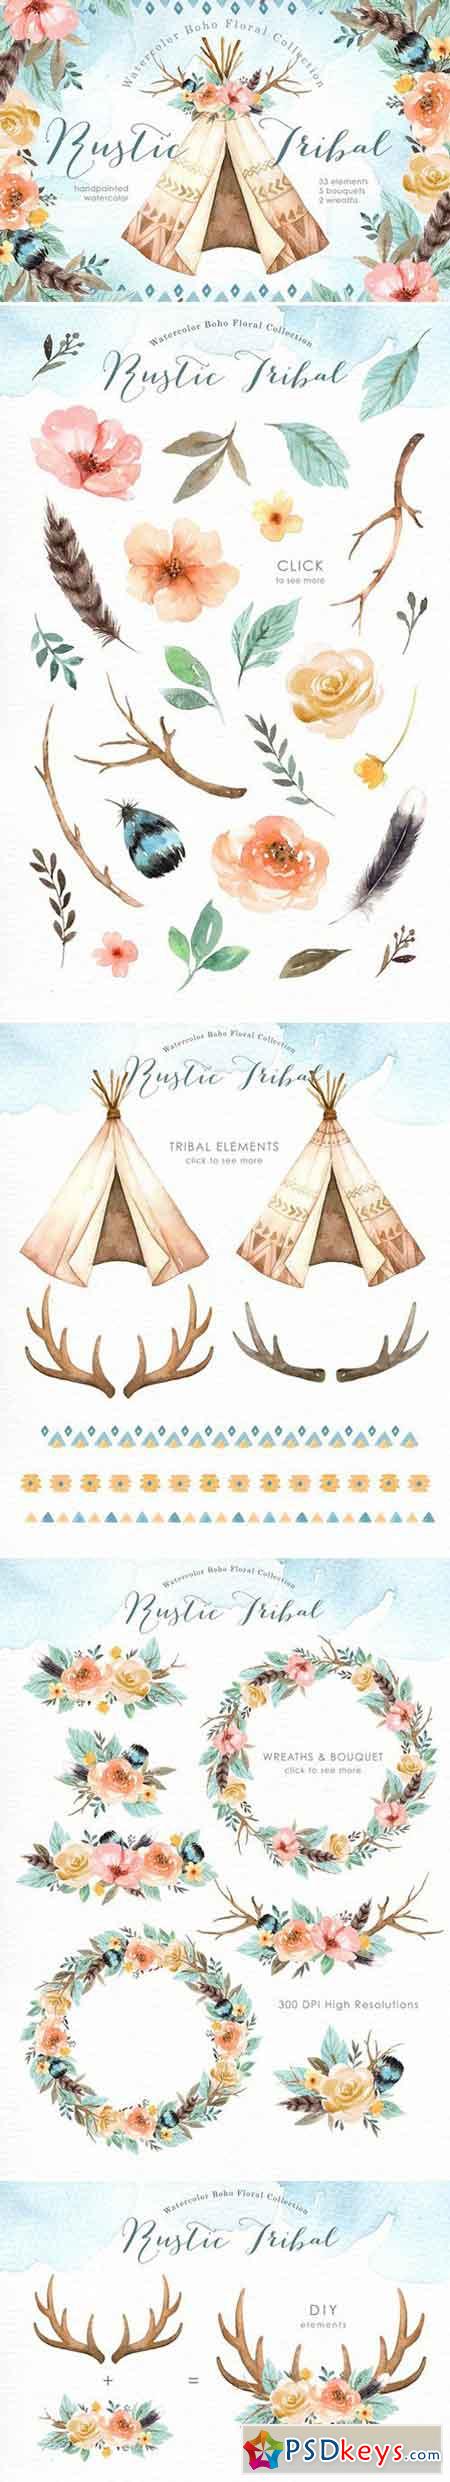 Rustic Tribal Watercolor Clip Art 2428340